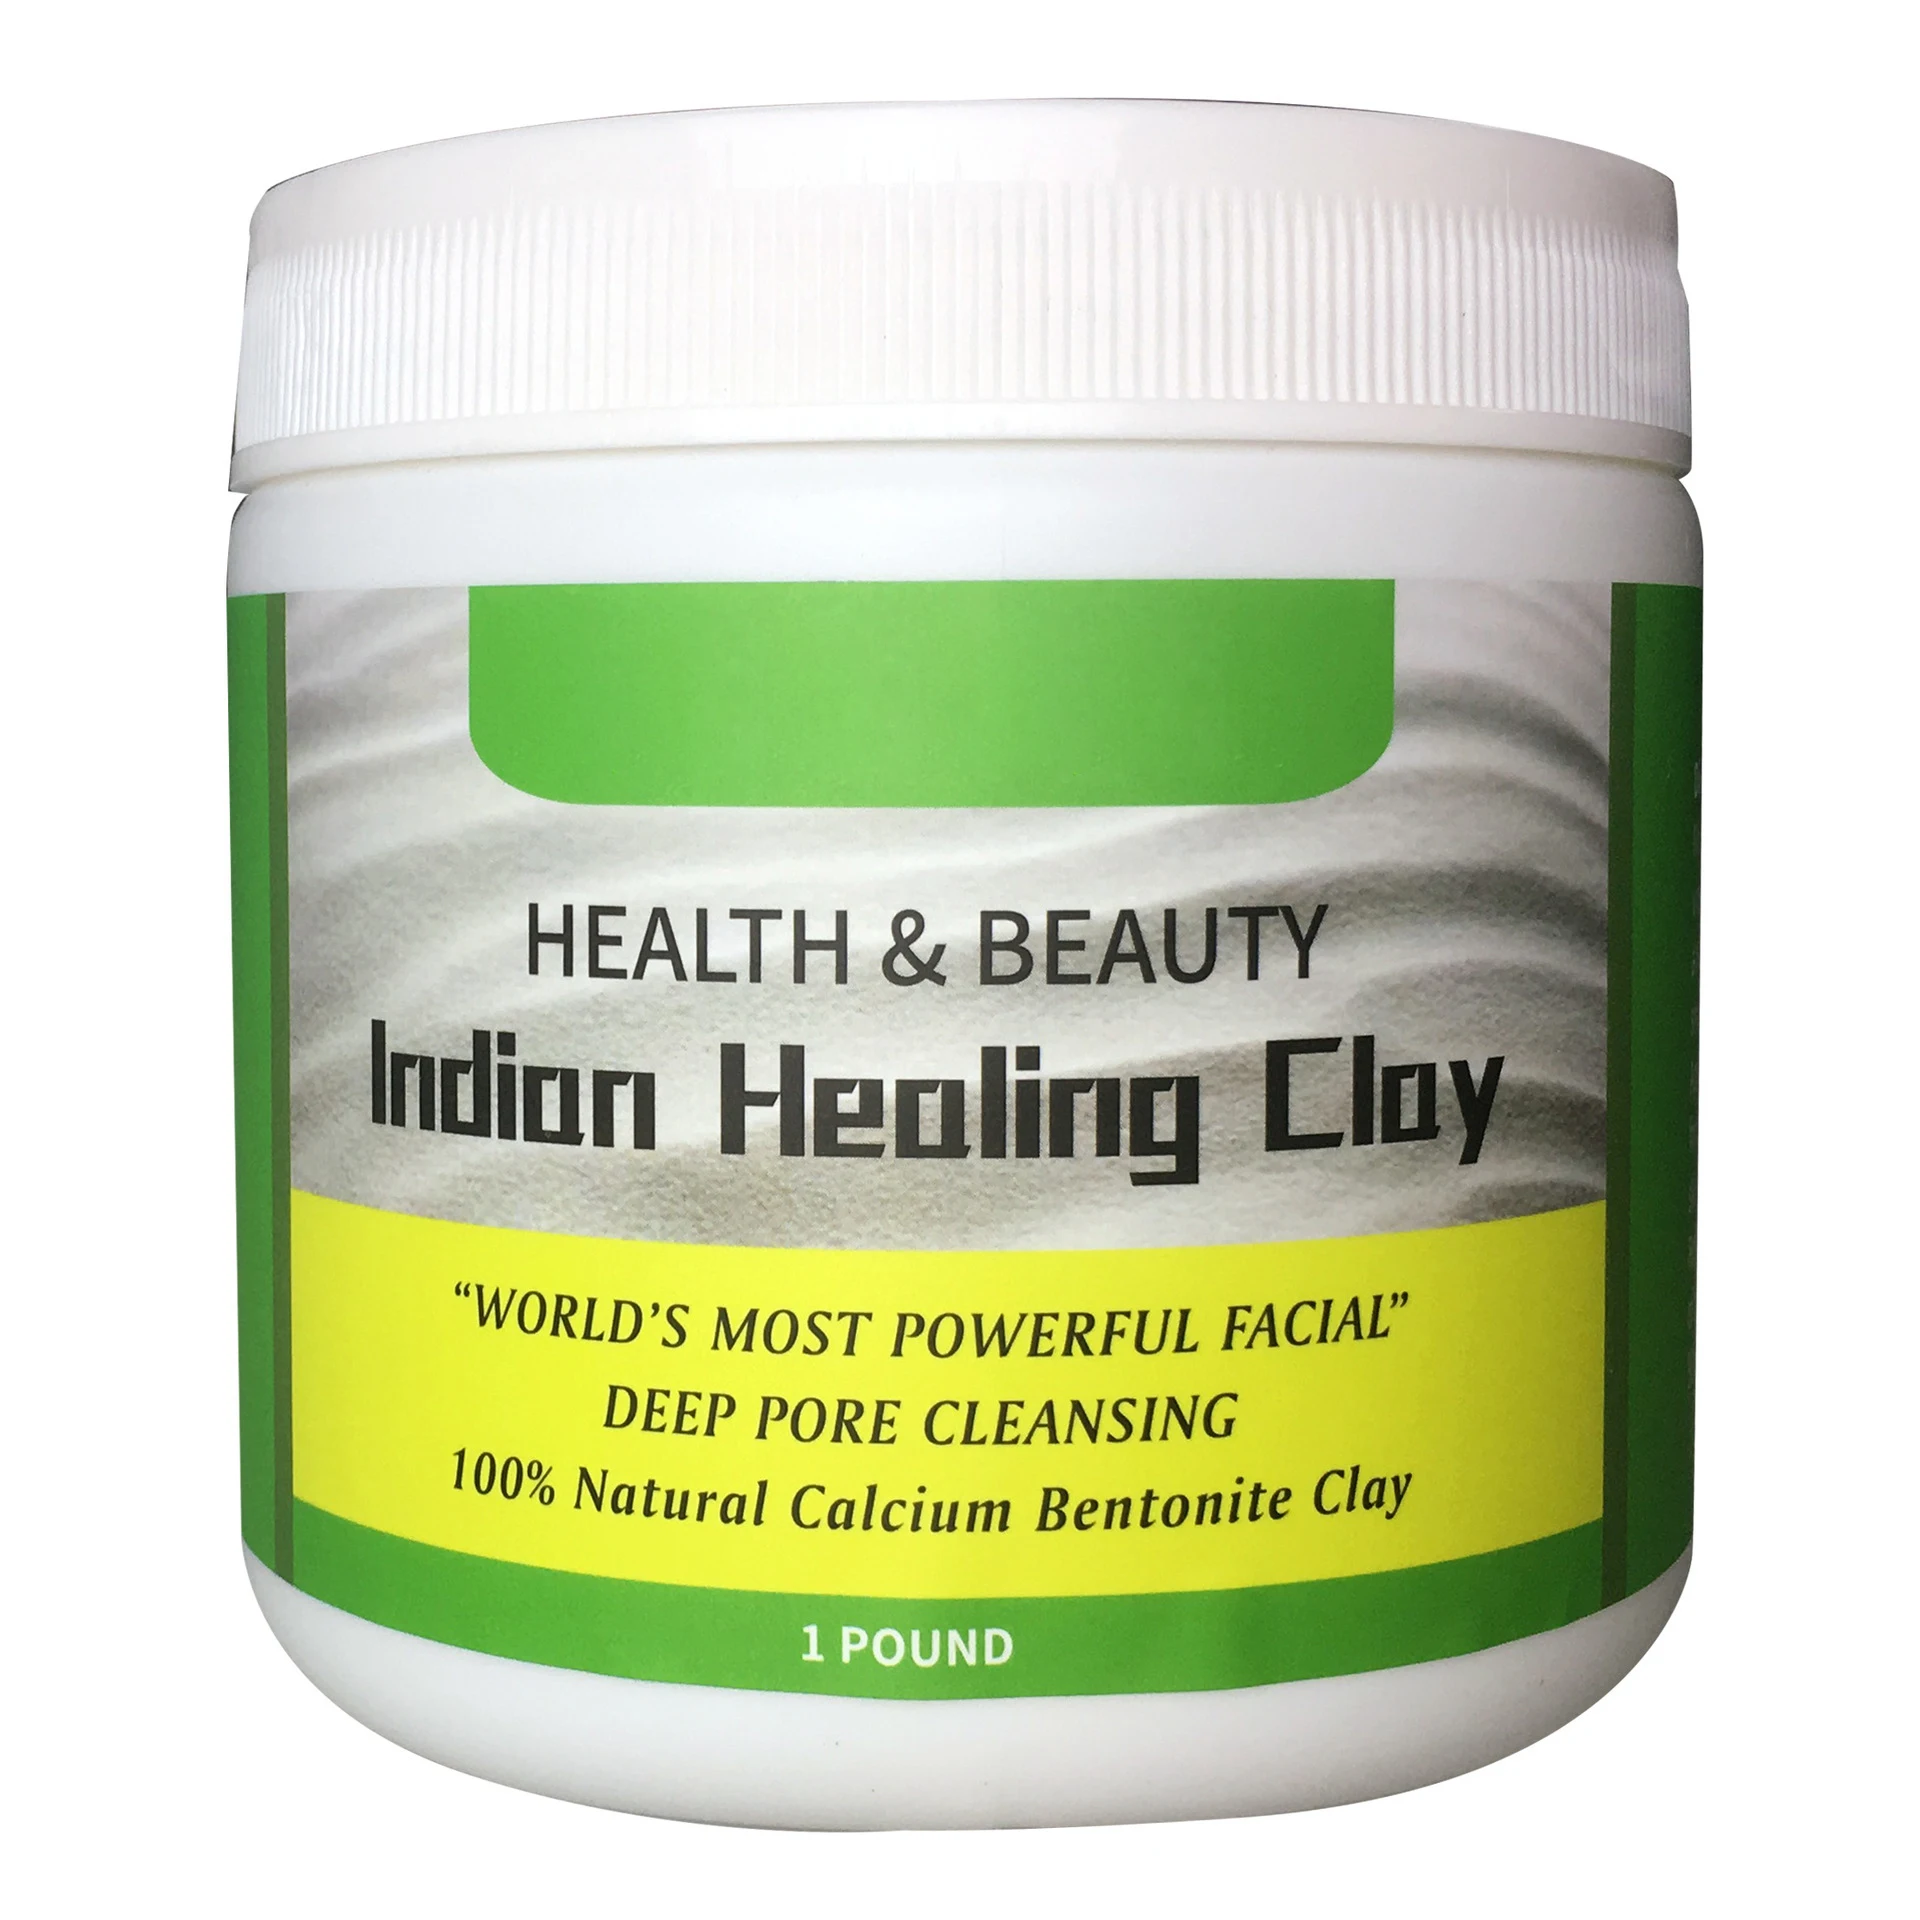 

1 lb Deep Pore Cleansing Facial Mask Indian Healing Clay Original 100% Natural Calcium Bentonite Clay Mask Powder